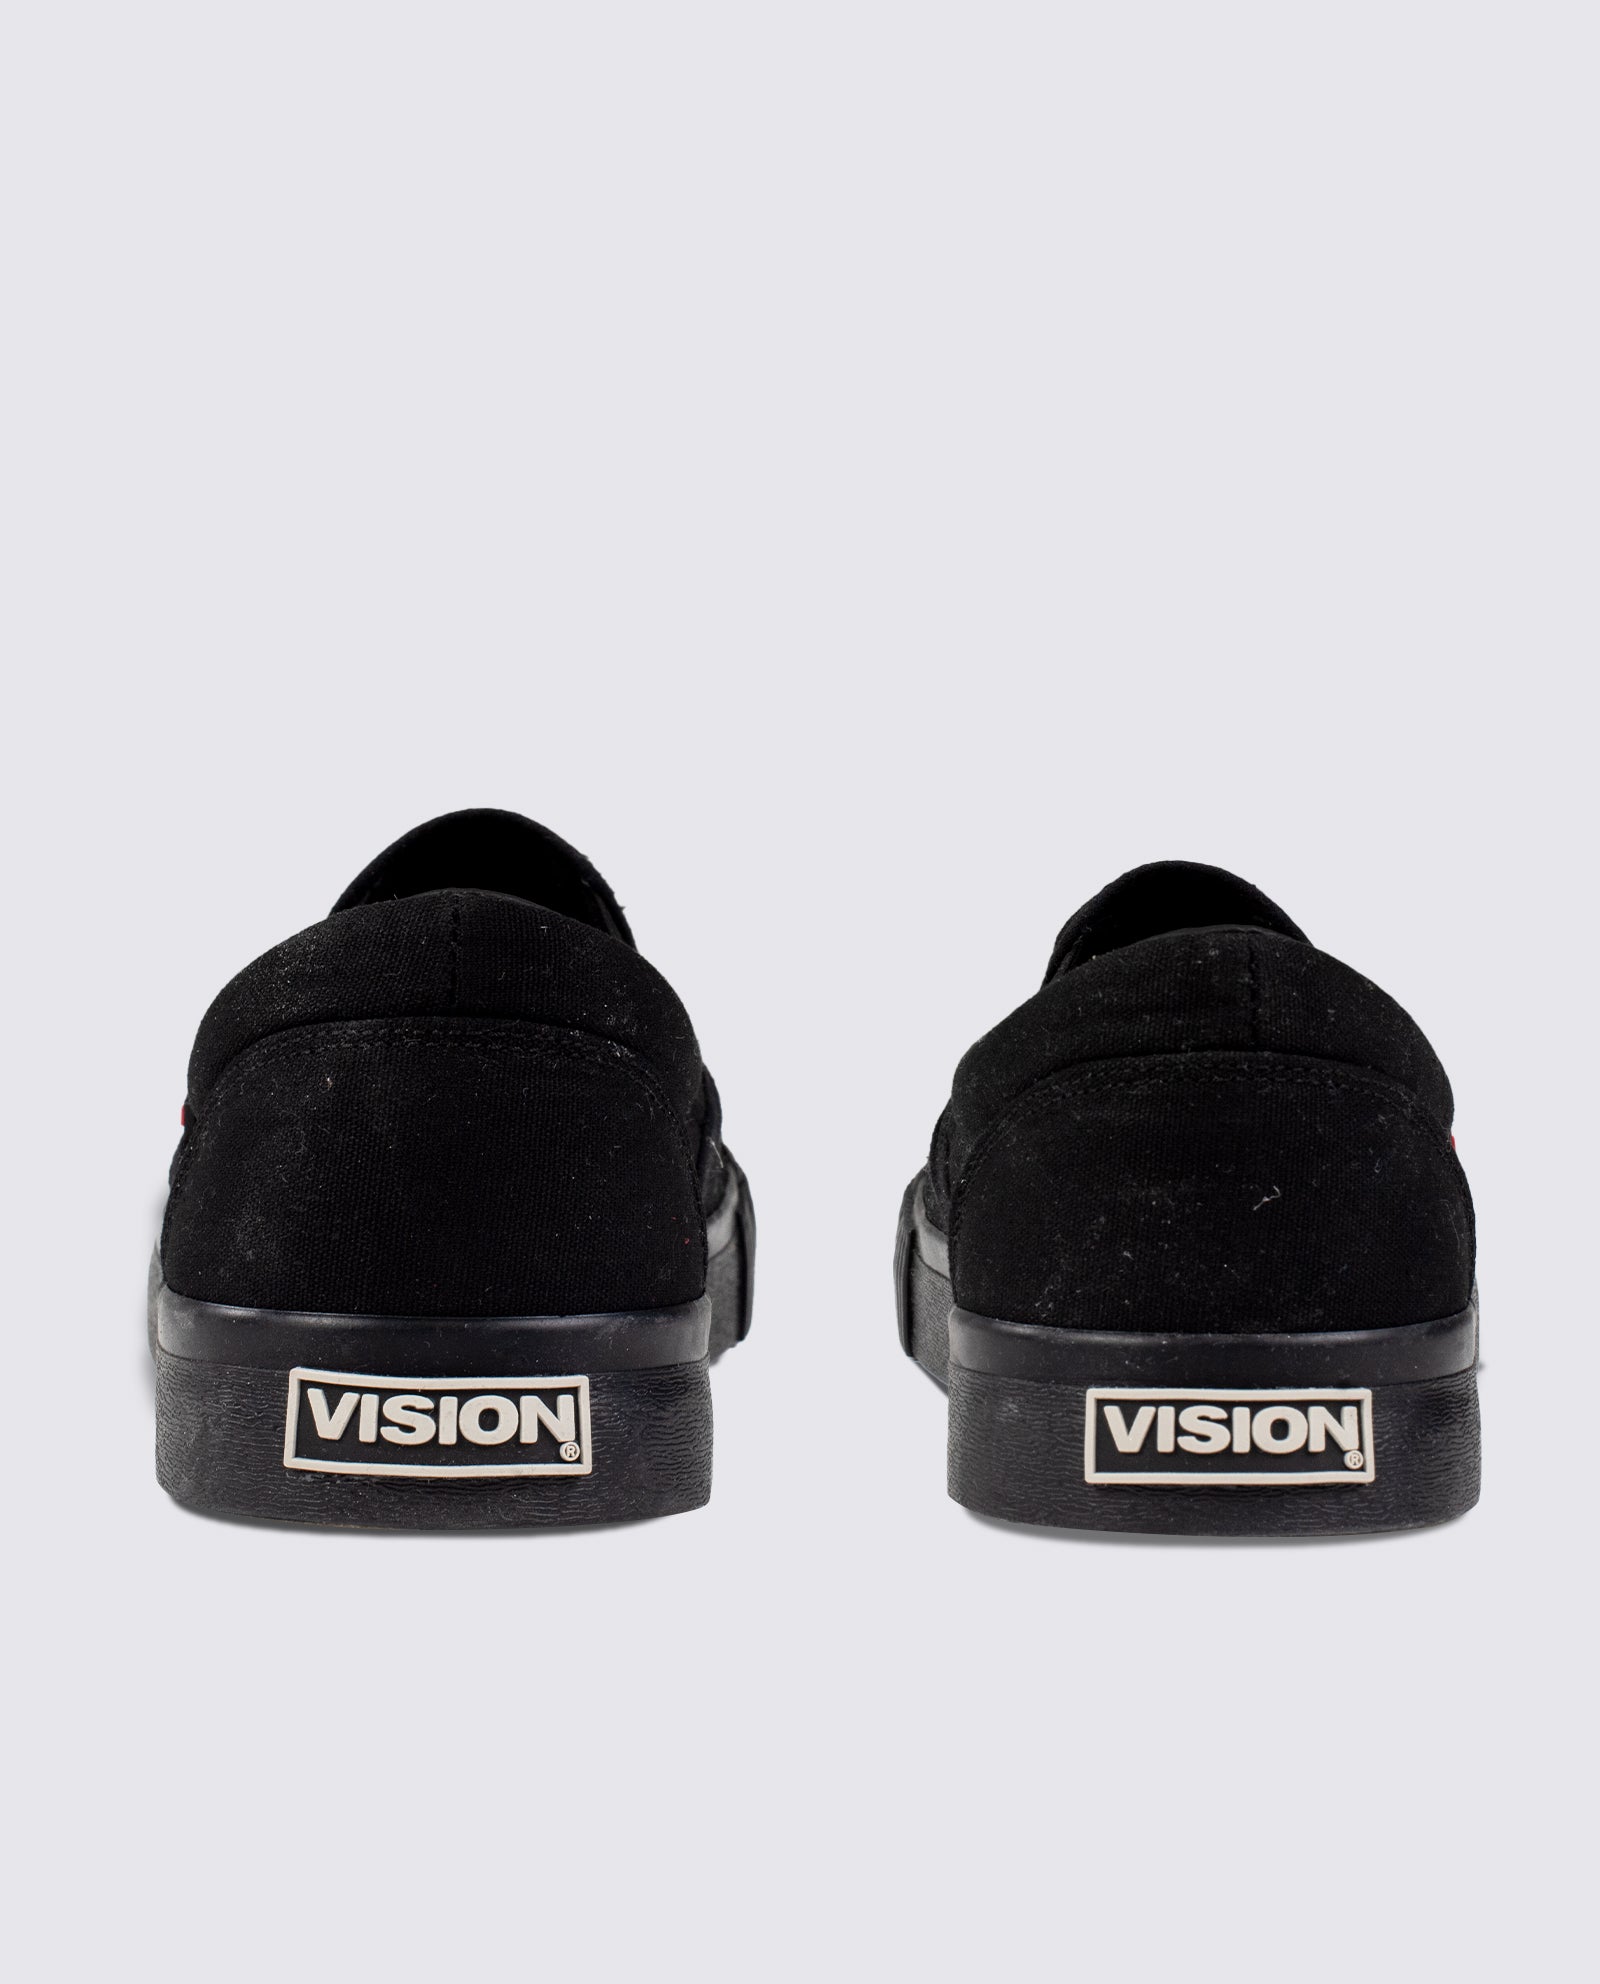 Vision Street Wear Canvas Skateboard Slip On Shoes Black